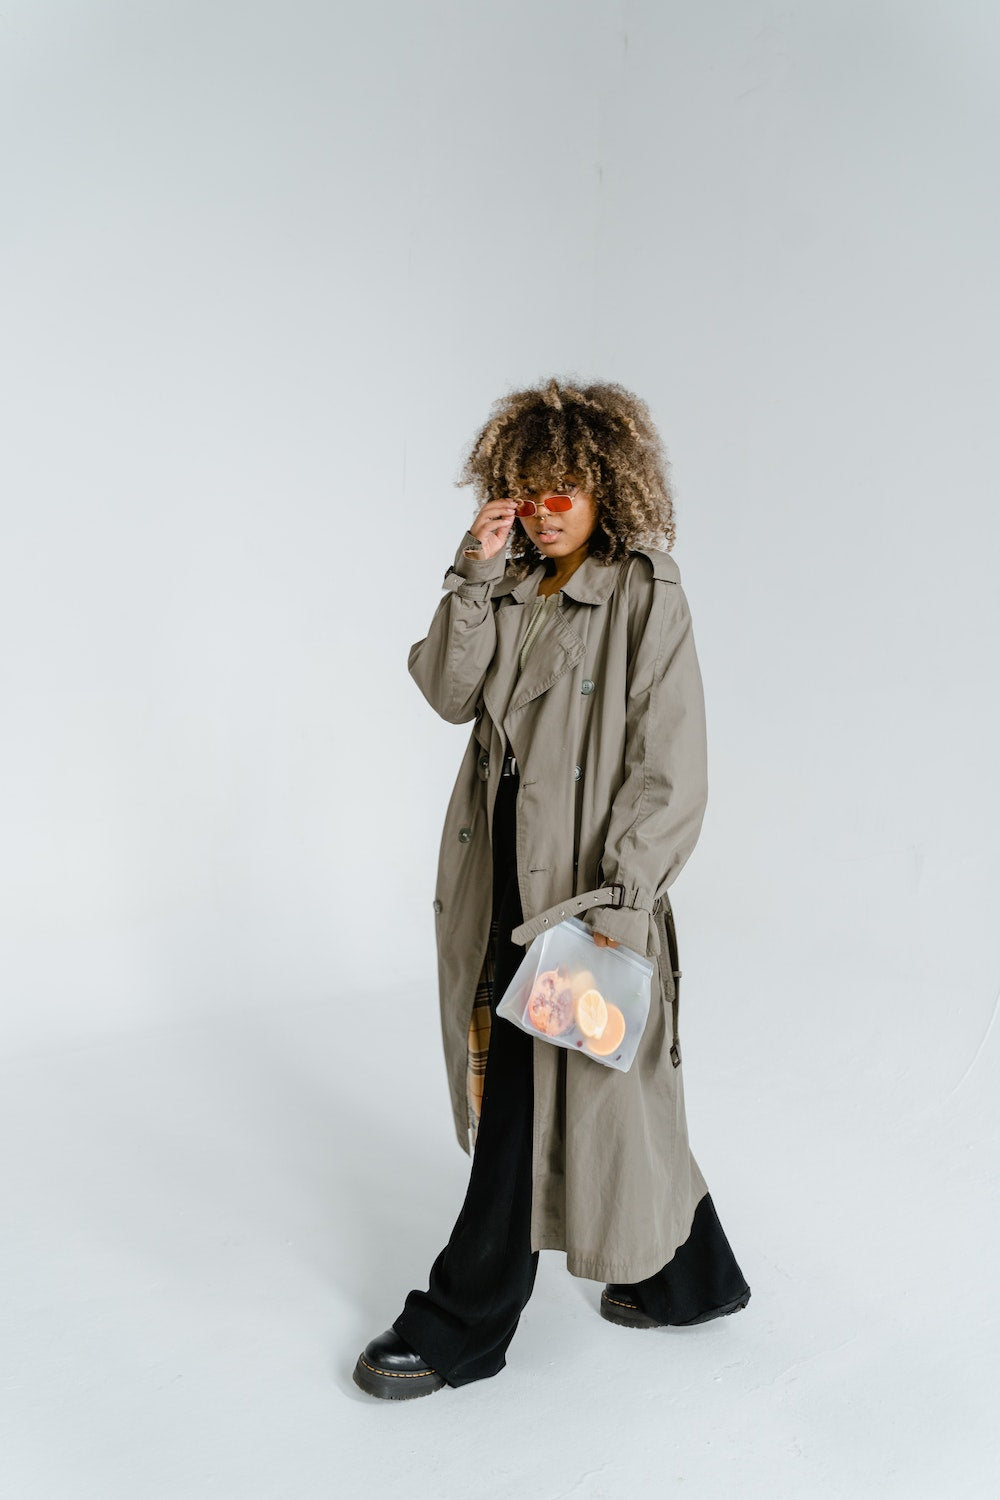 Kinky Boots fashion trench coat